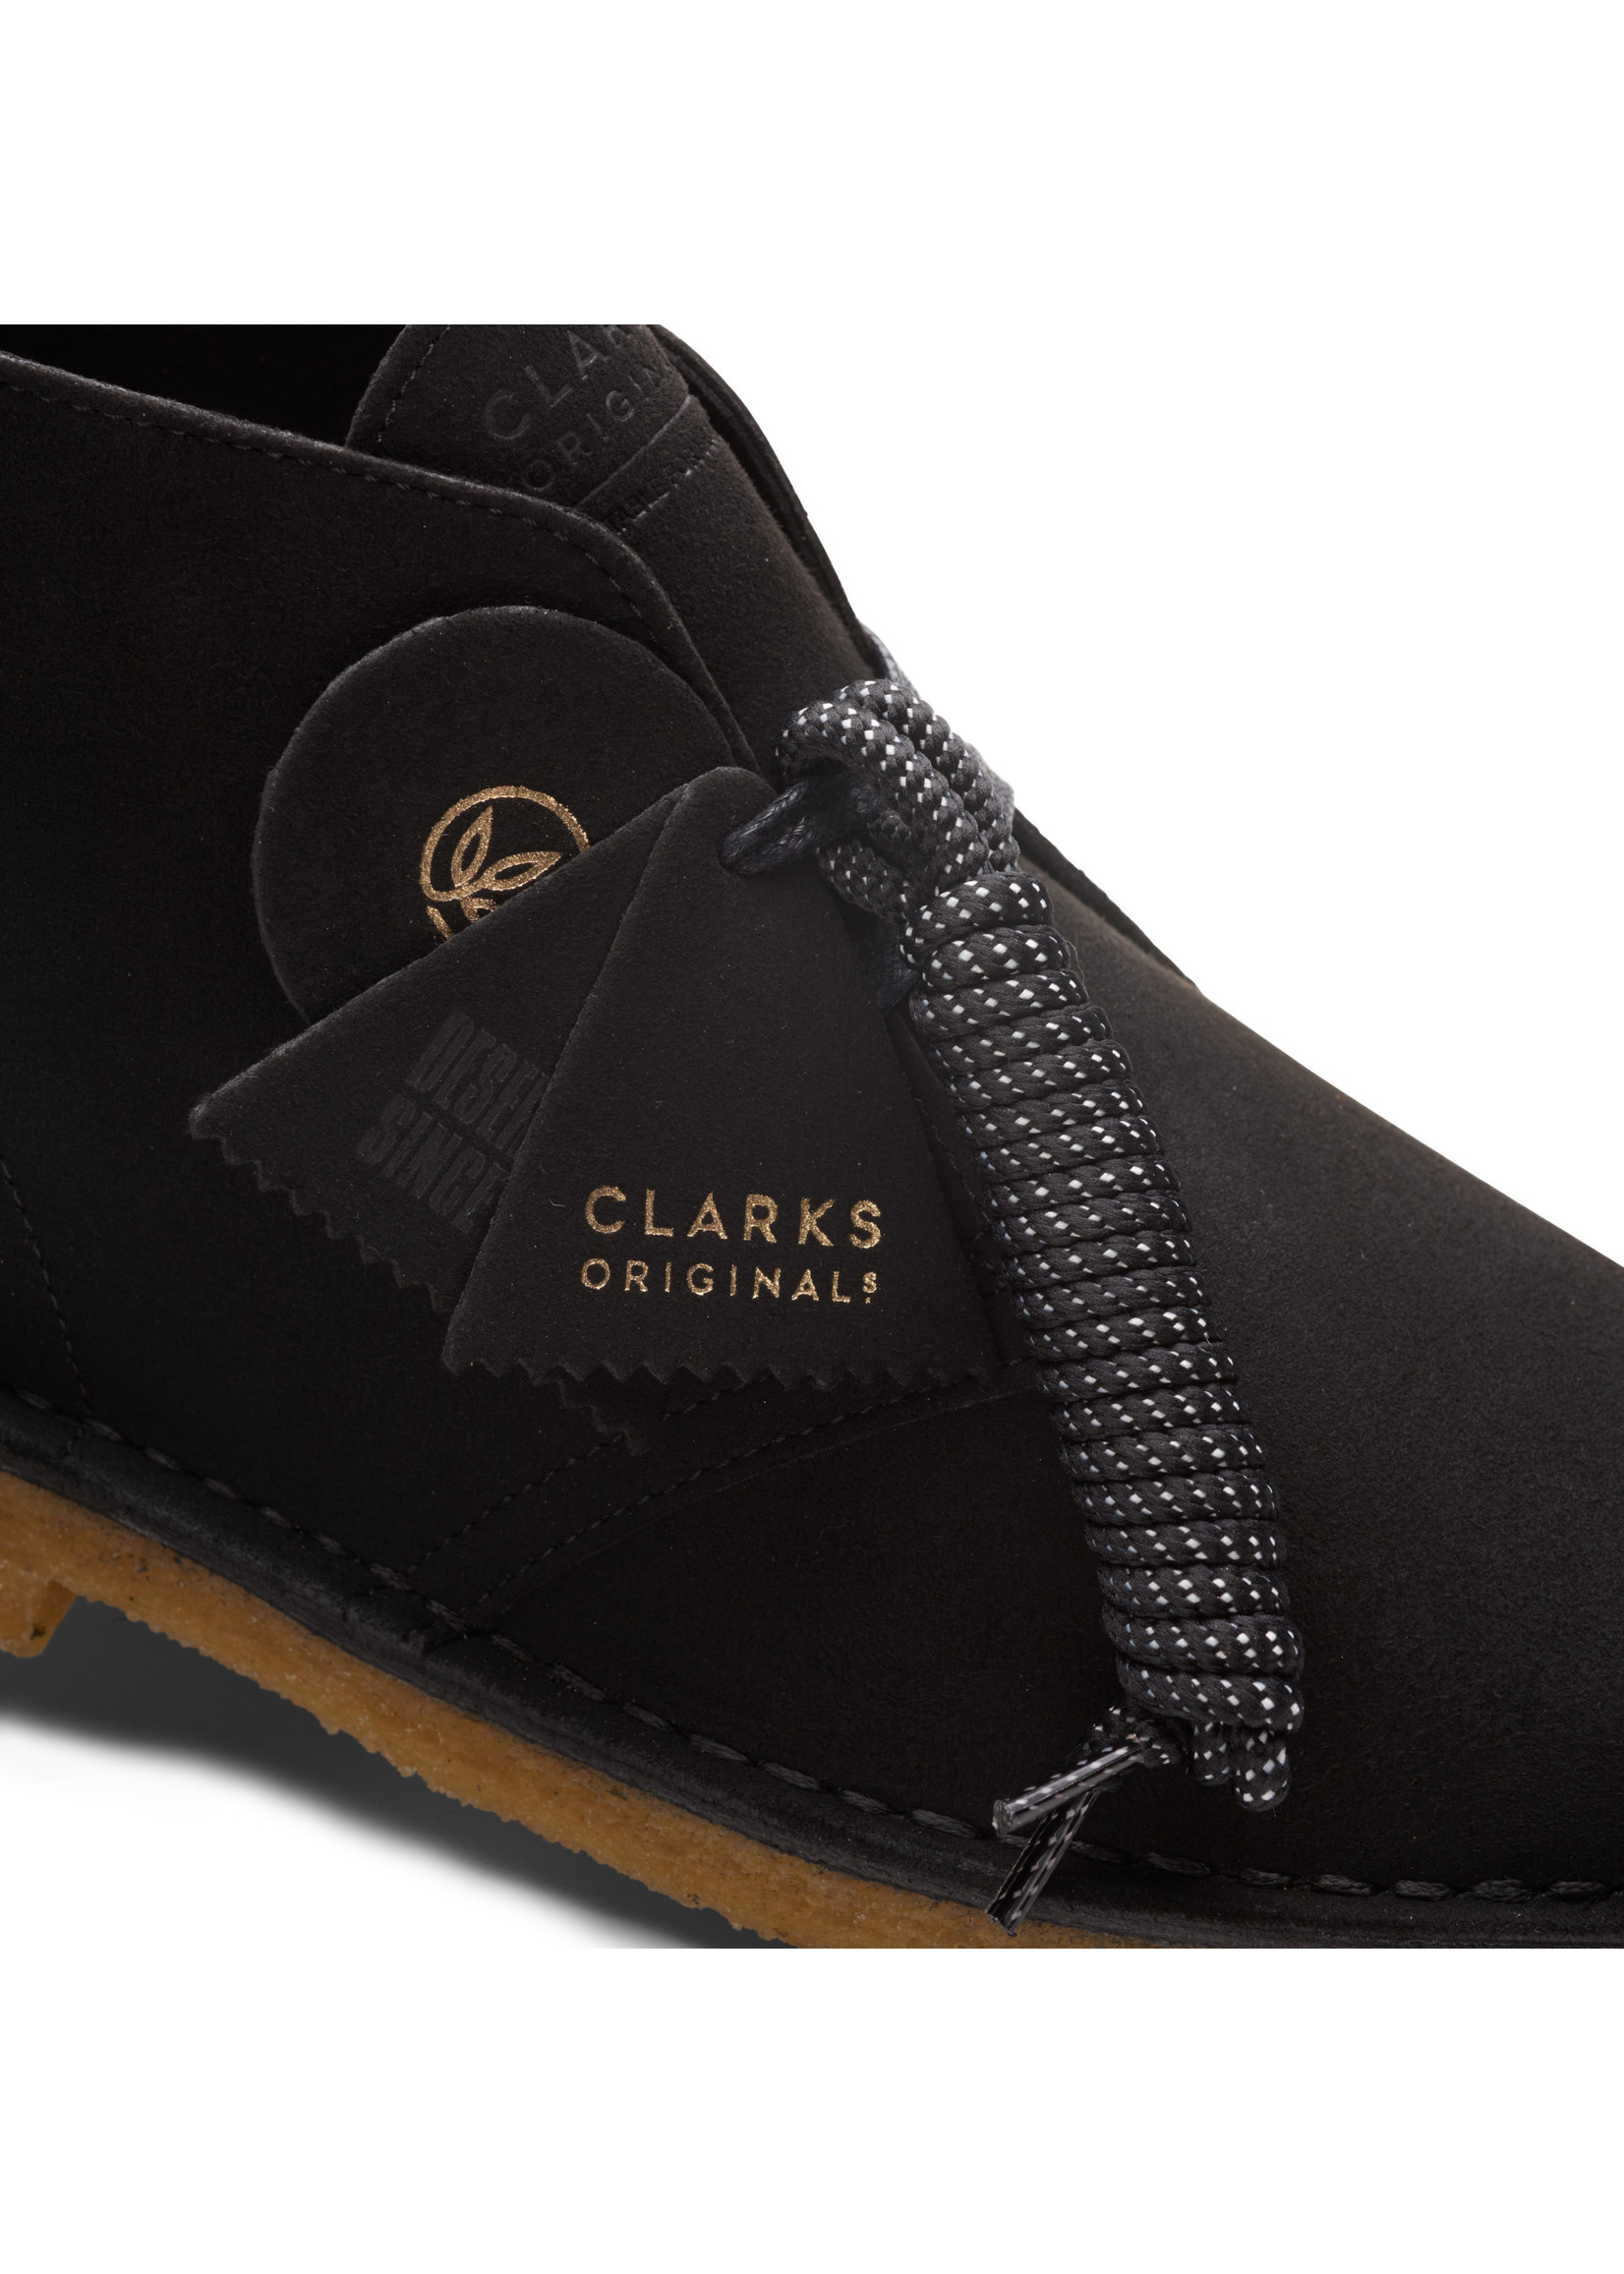 Clarks Originals Desert Boot VEGAN Black